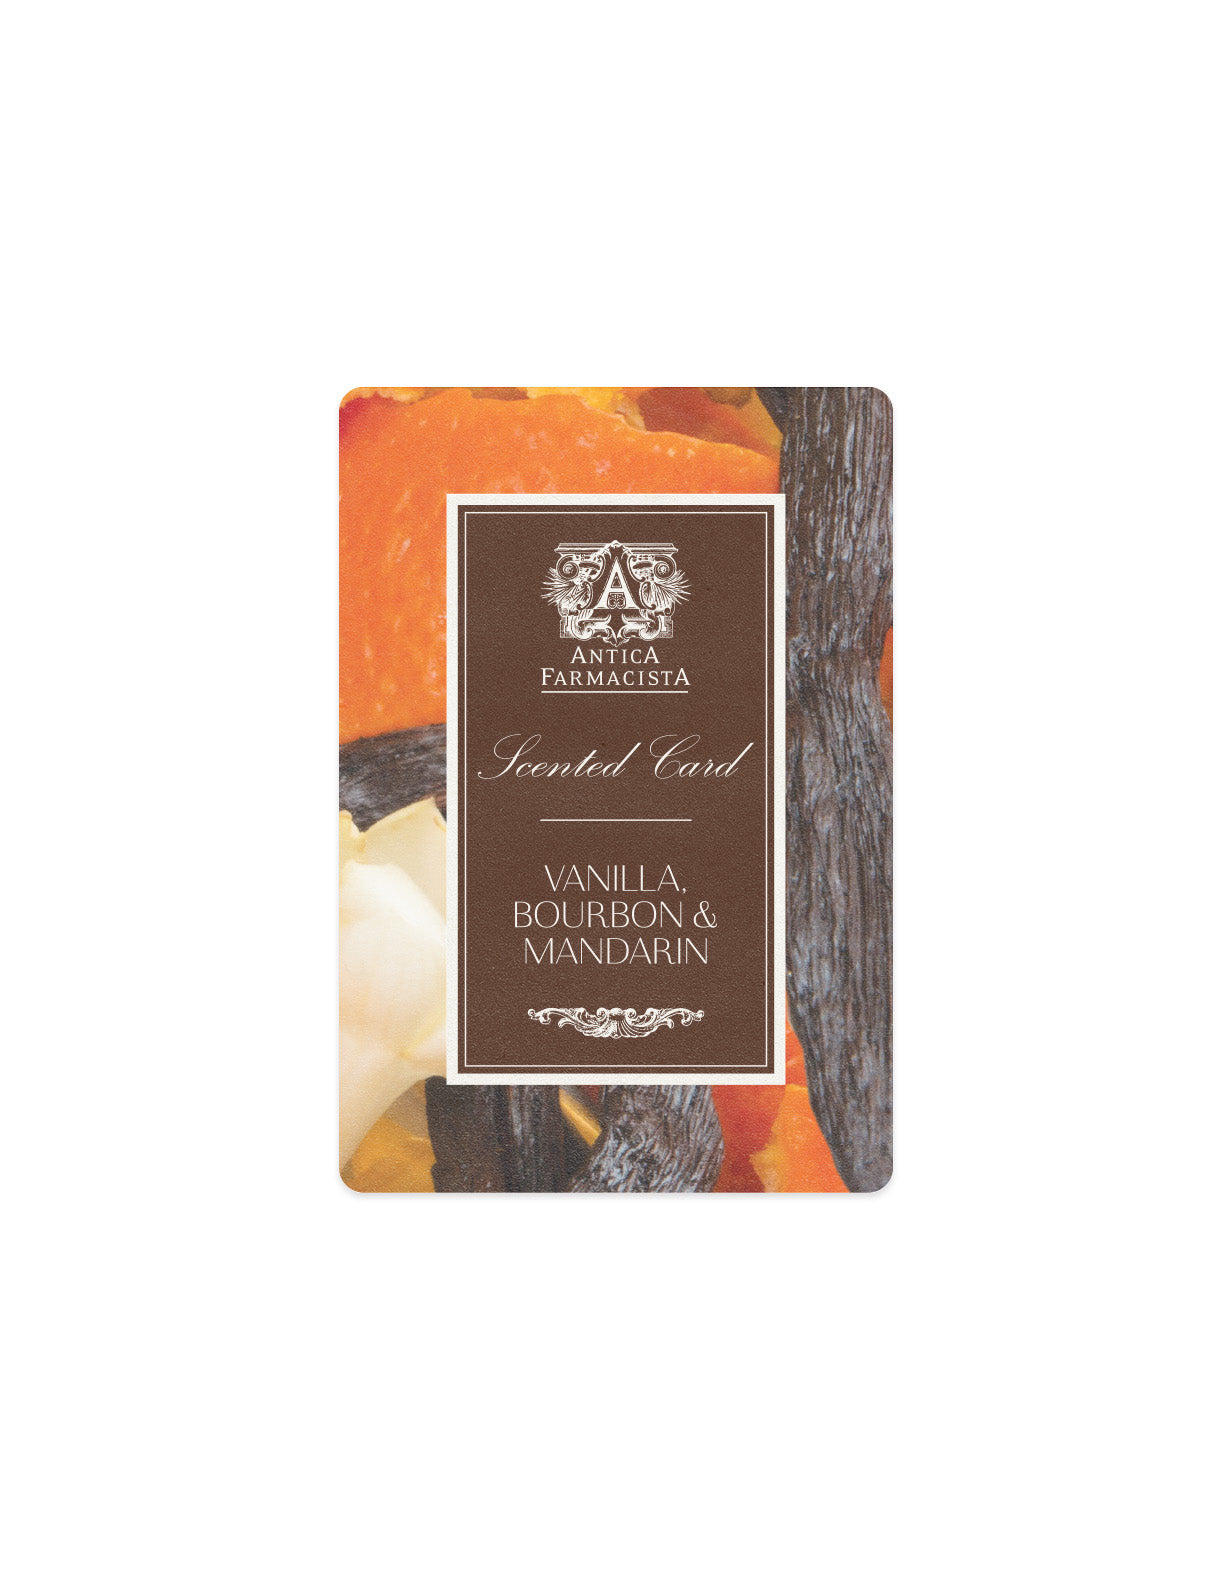 GWP - Scented Card - Vanilla, Bourbon & Mandarin